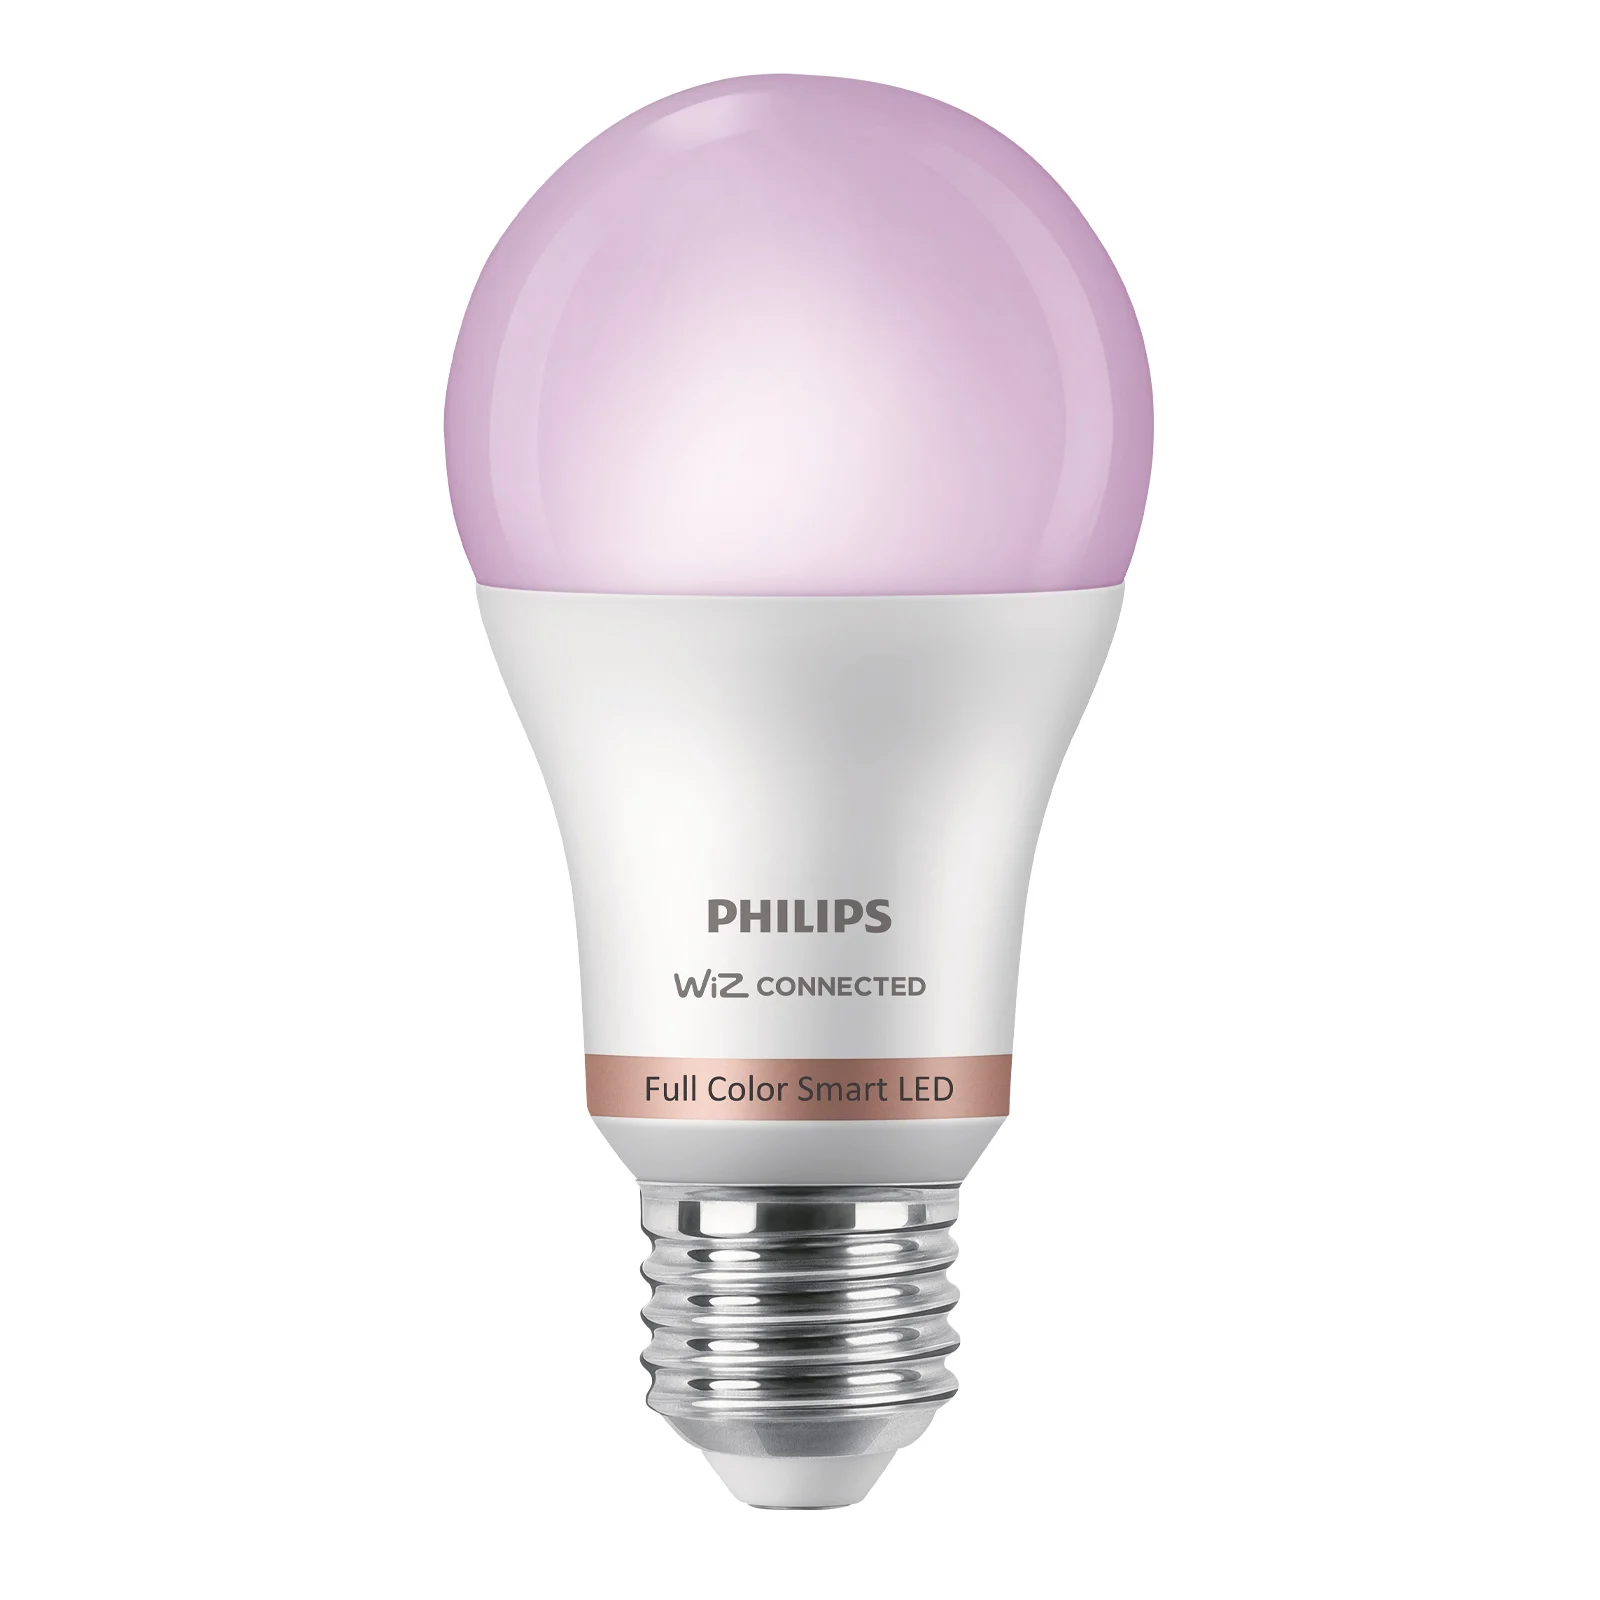 A smart LED light bulb